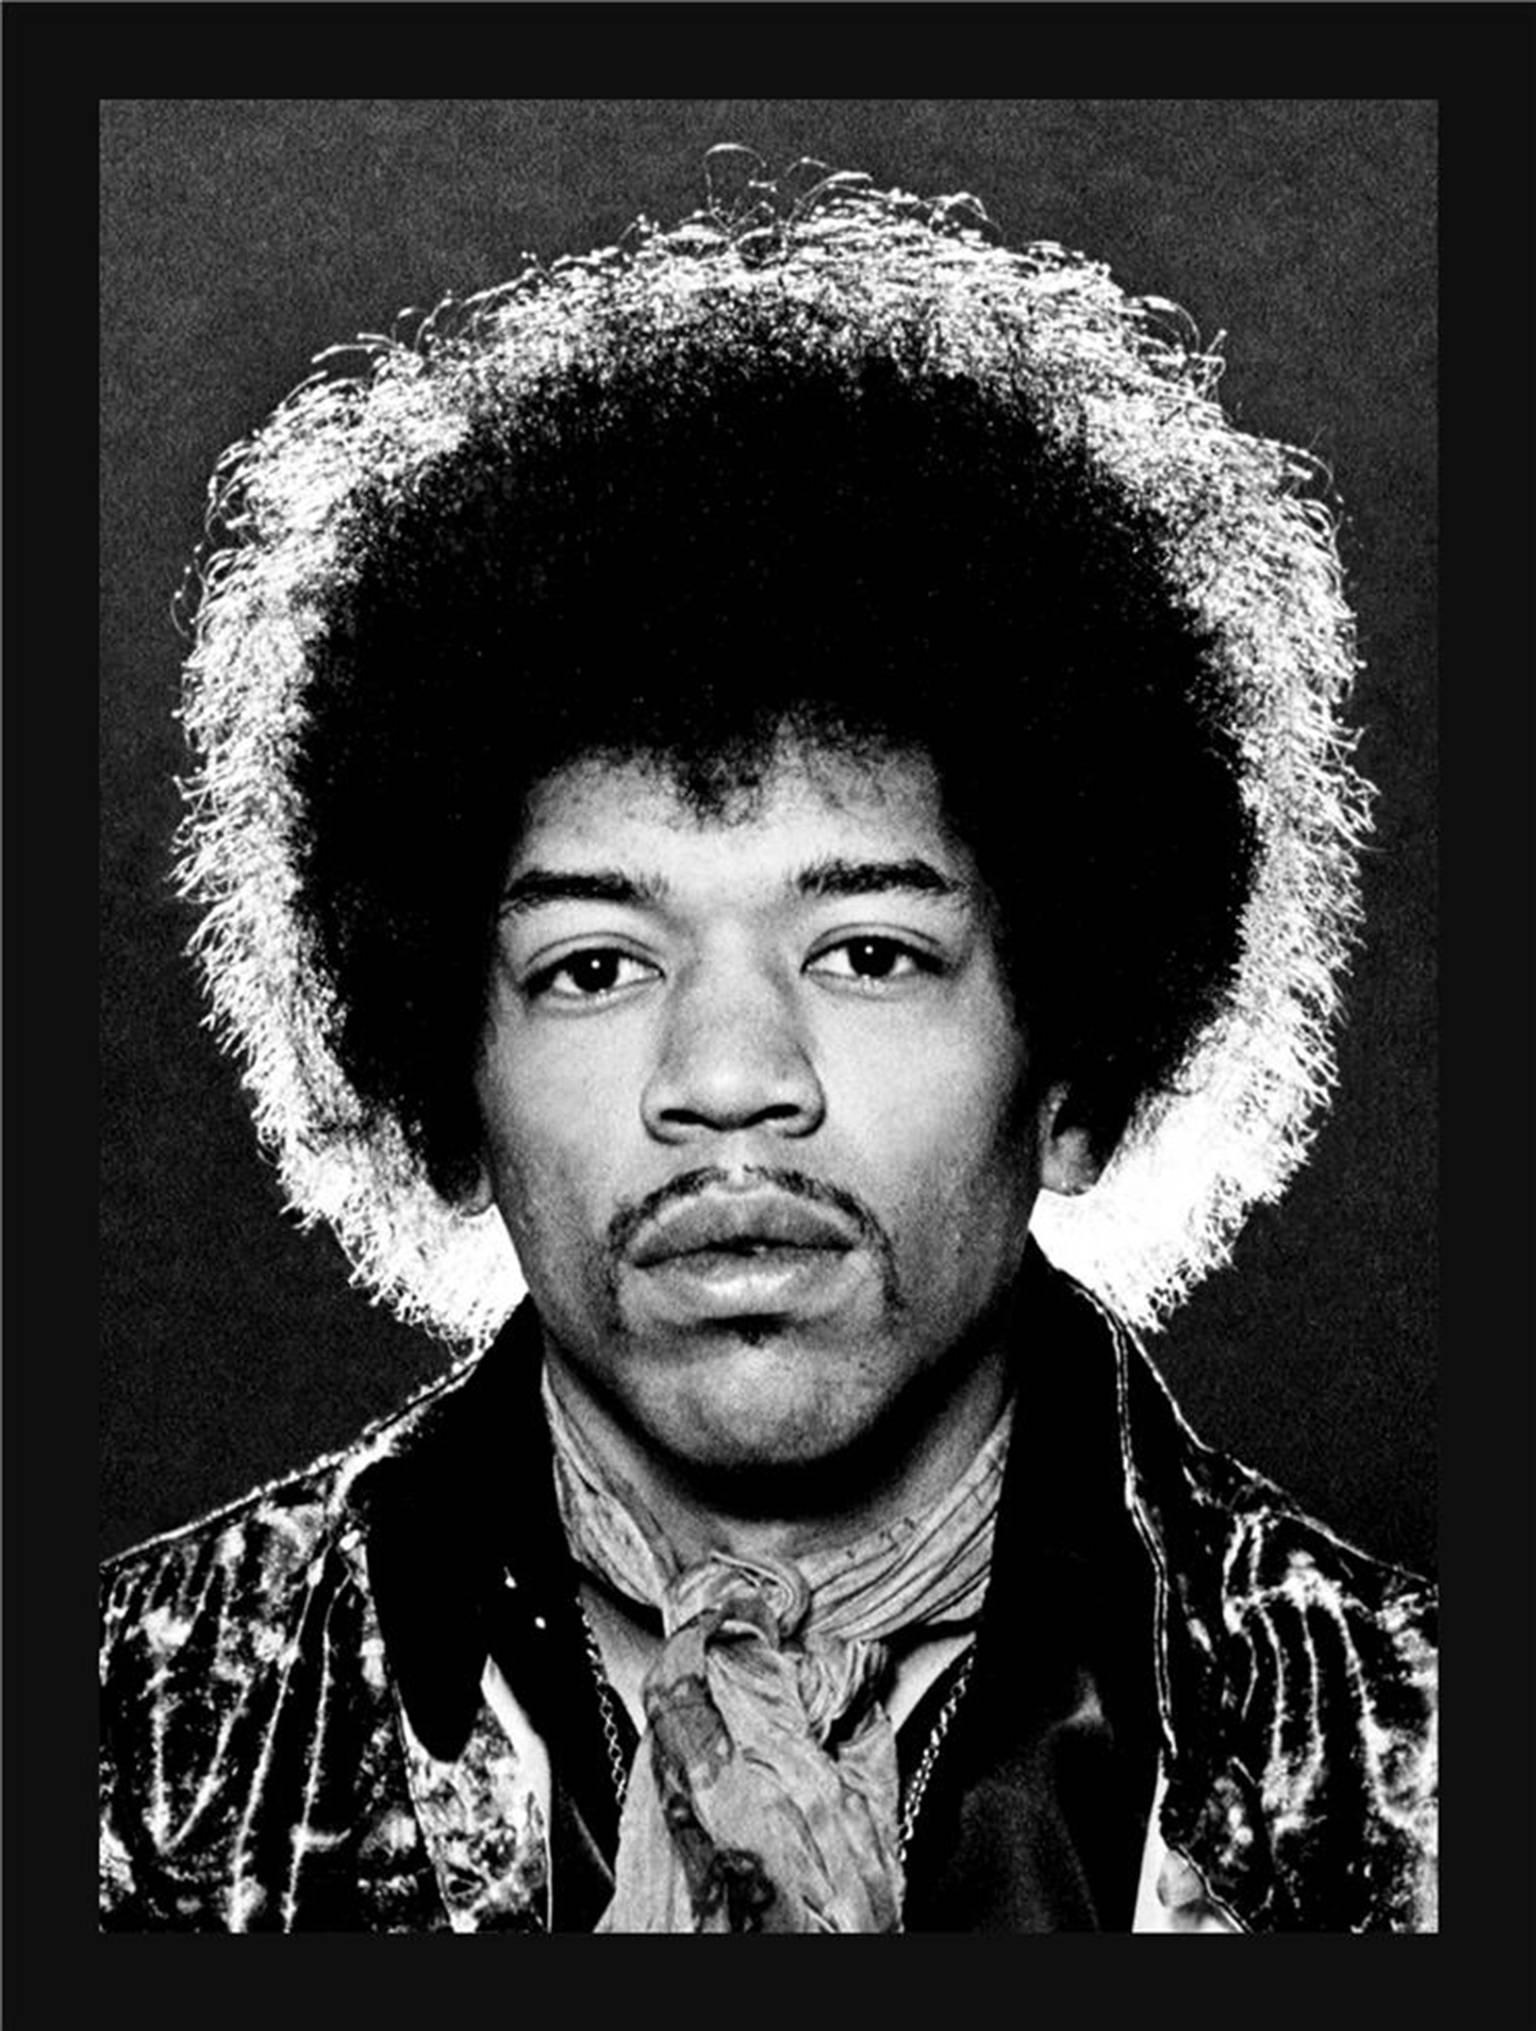 Karl Ferris Black and White Photograph - Jimi Hendrix, "Halo Portrait" 1967